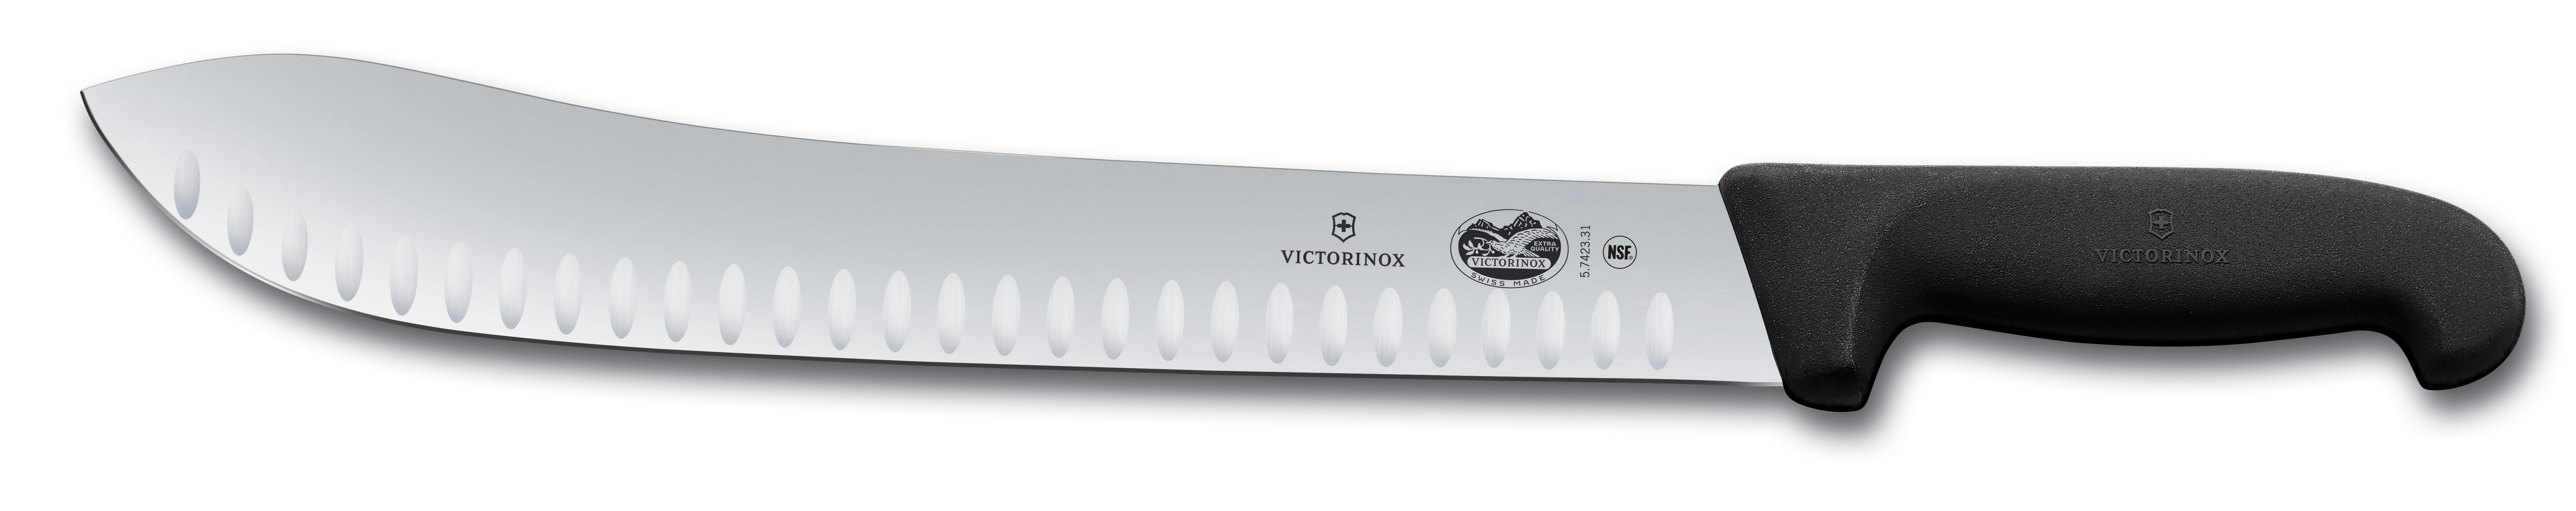 Victorinox Butcher Knife 12 inch, Cutlery